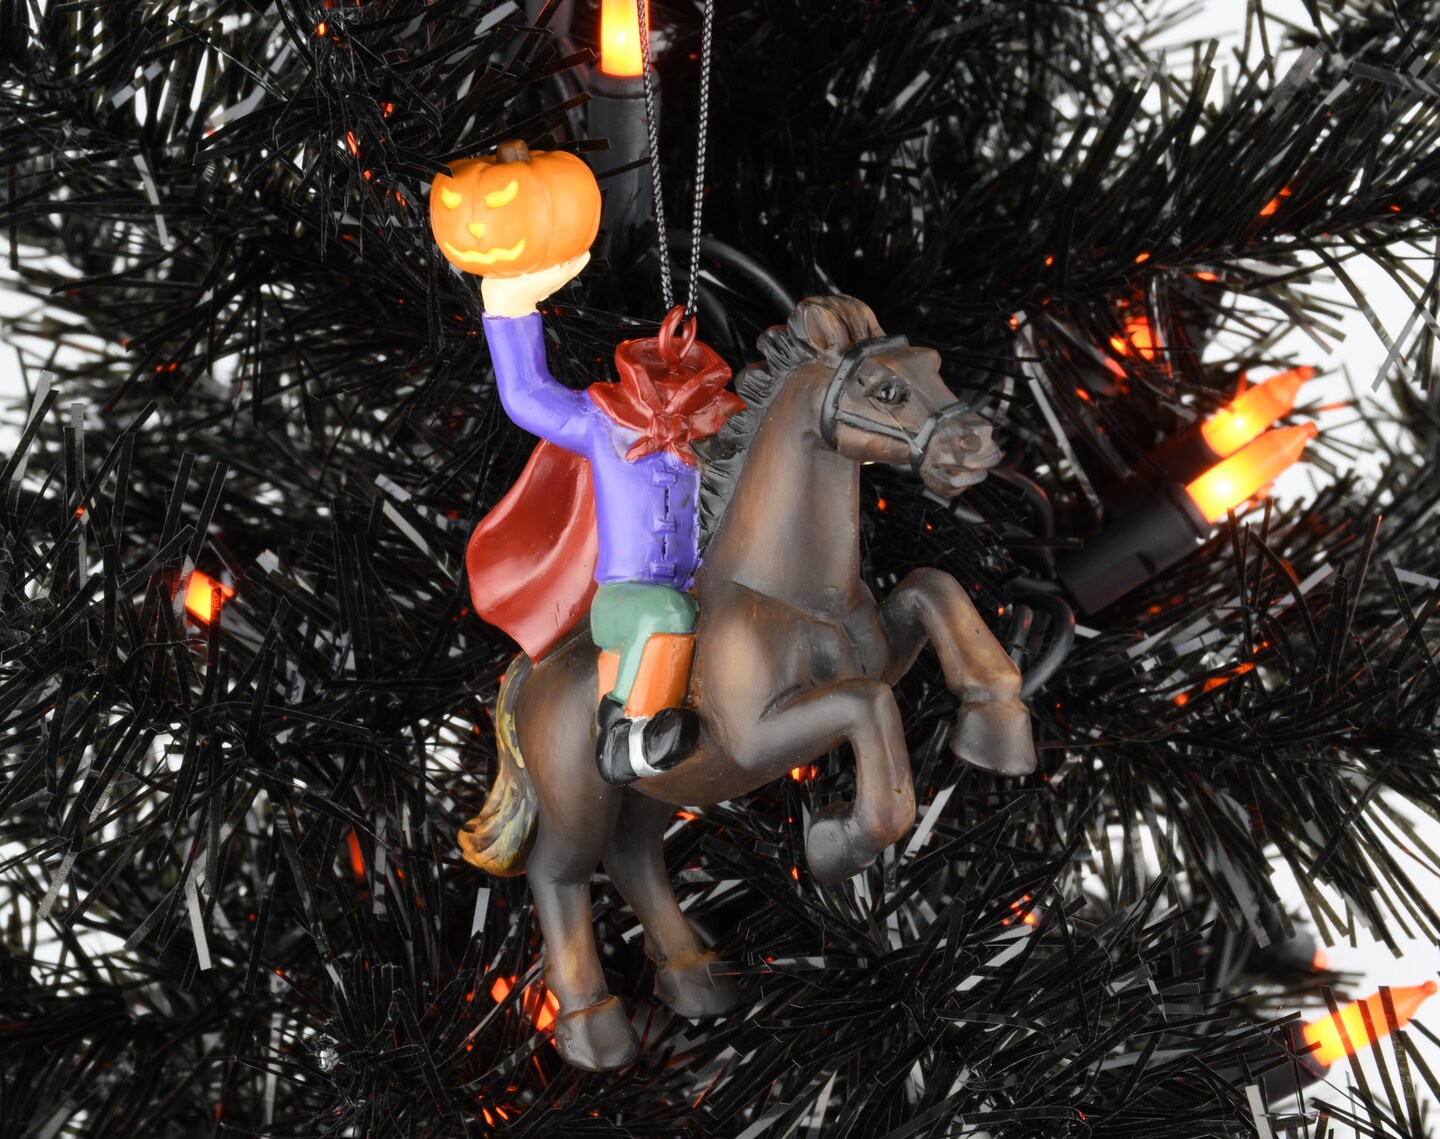 Tree Buddees Headless Horseman with Pumpkin Halloween / Christmas Ornaments